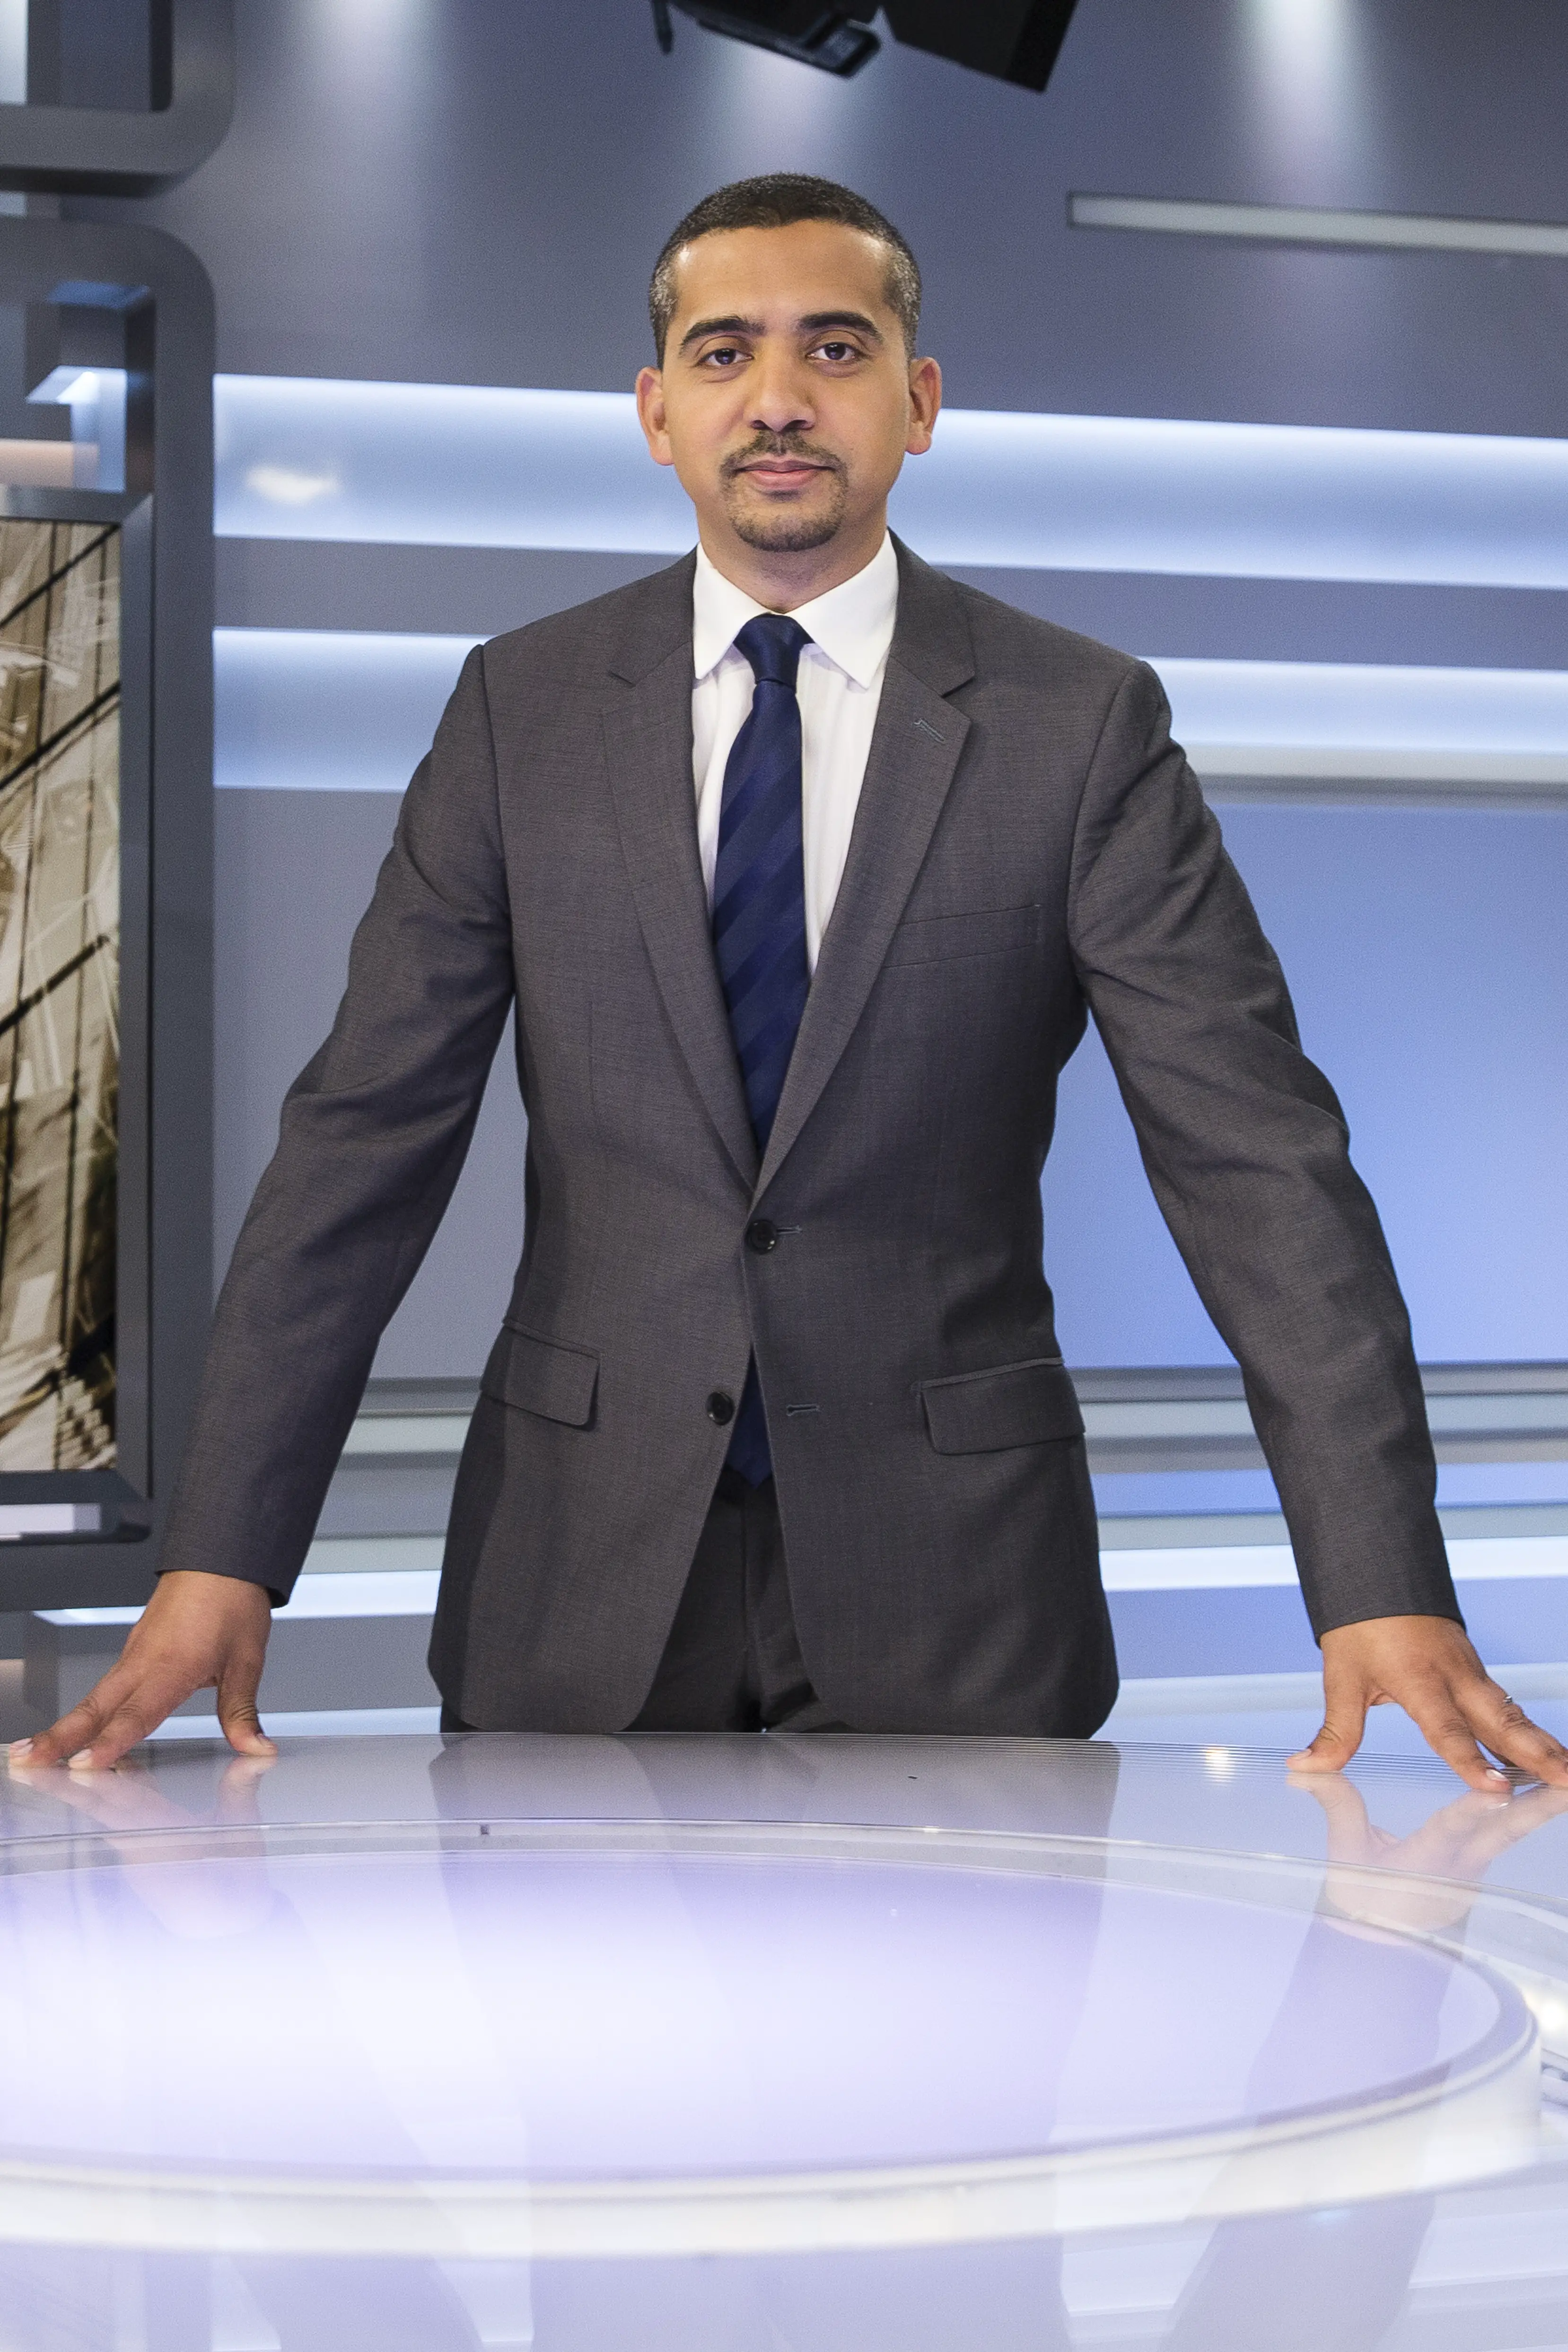 UpFront with Mehdi Hasan to launch on Al Jazeera English